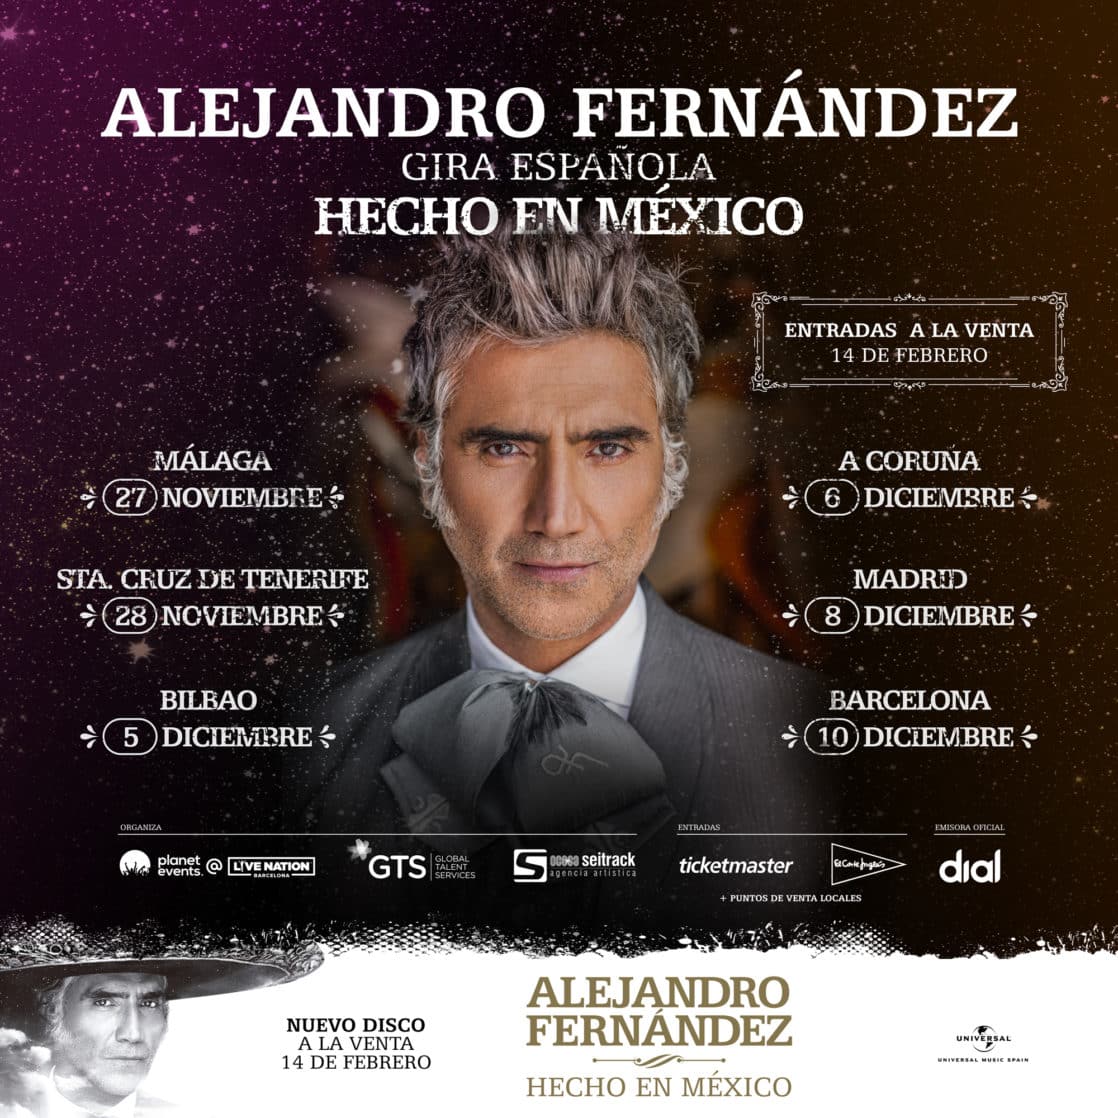 Alejandro Fernández presenta tour y álbum en España Ticketmaster Blog